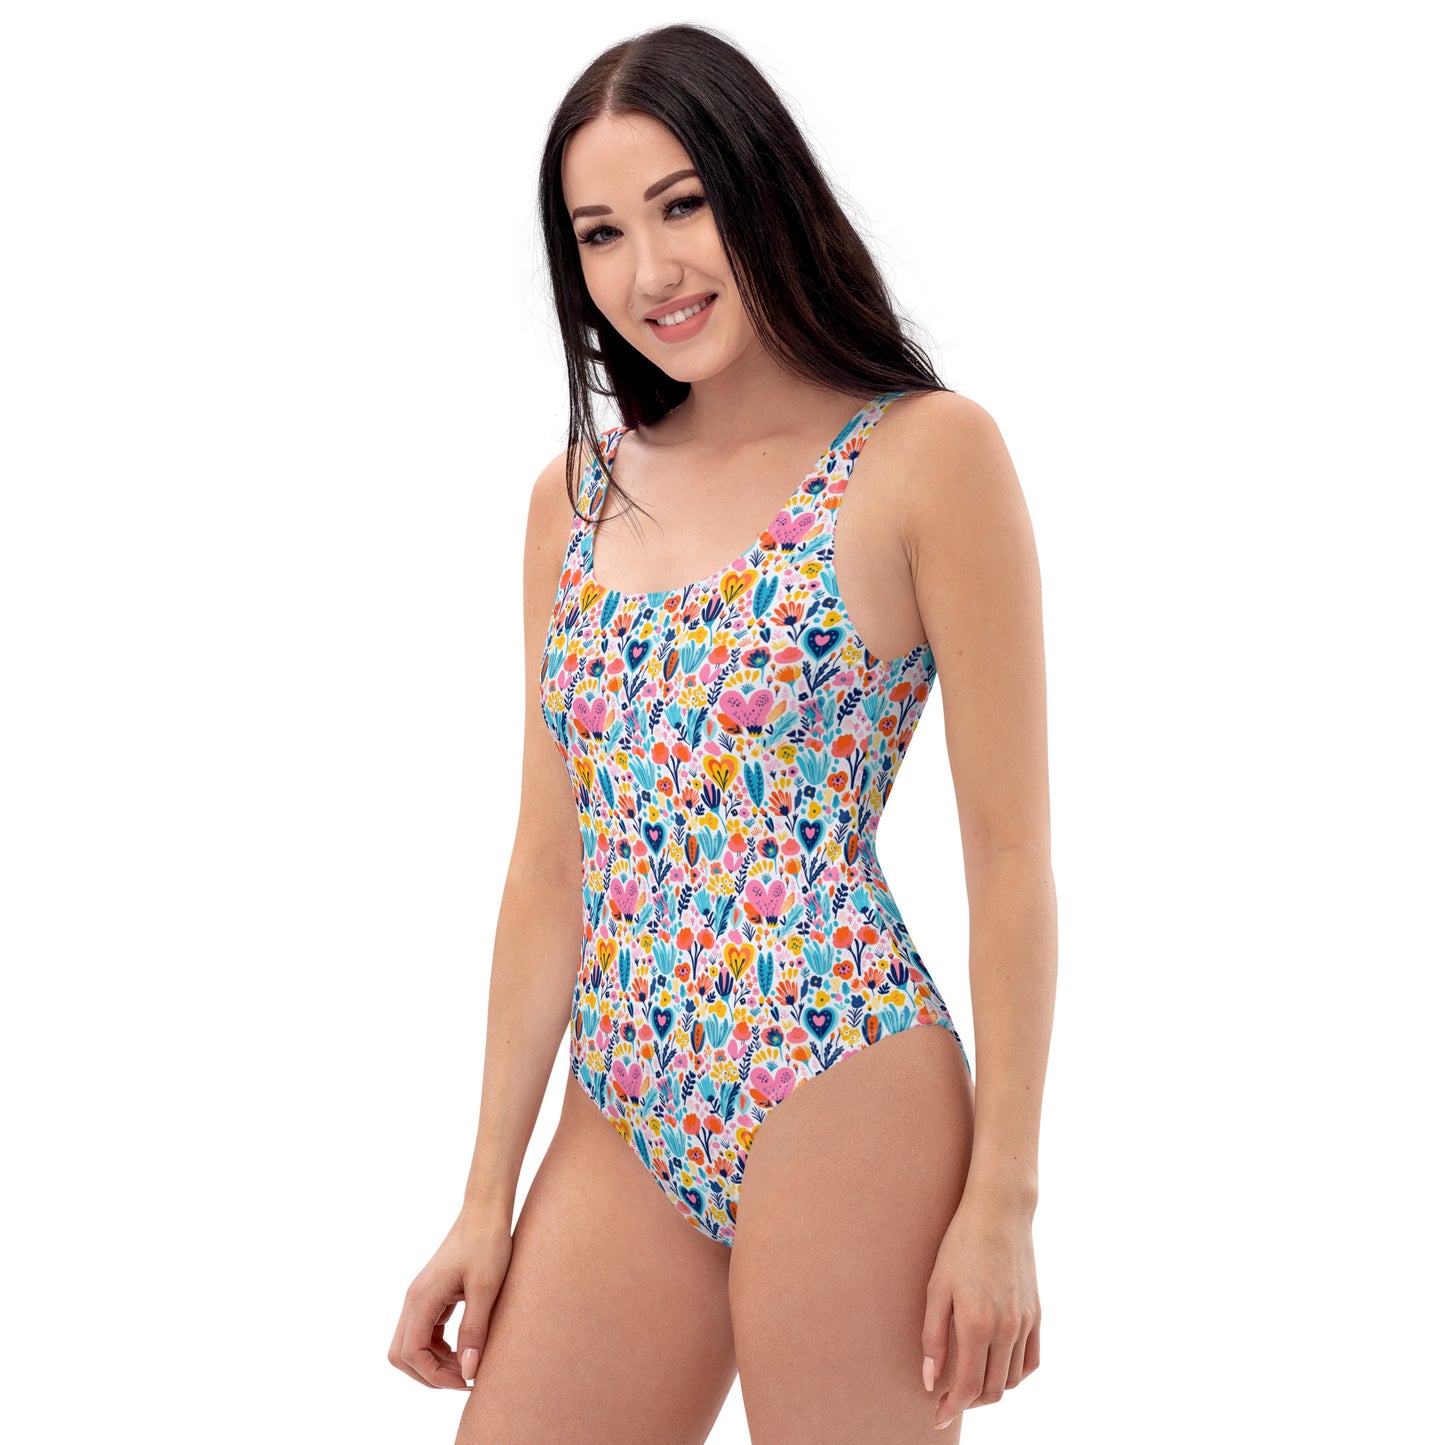 Fiori Classic One-Piece Swimsuit